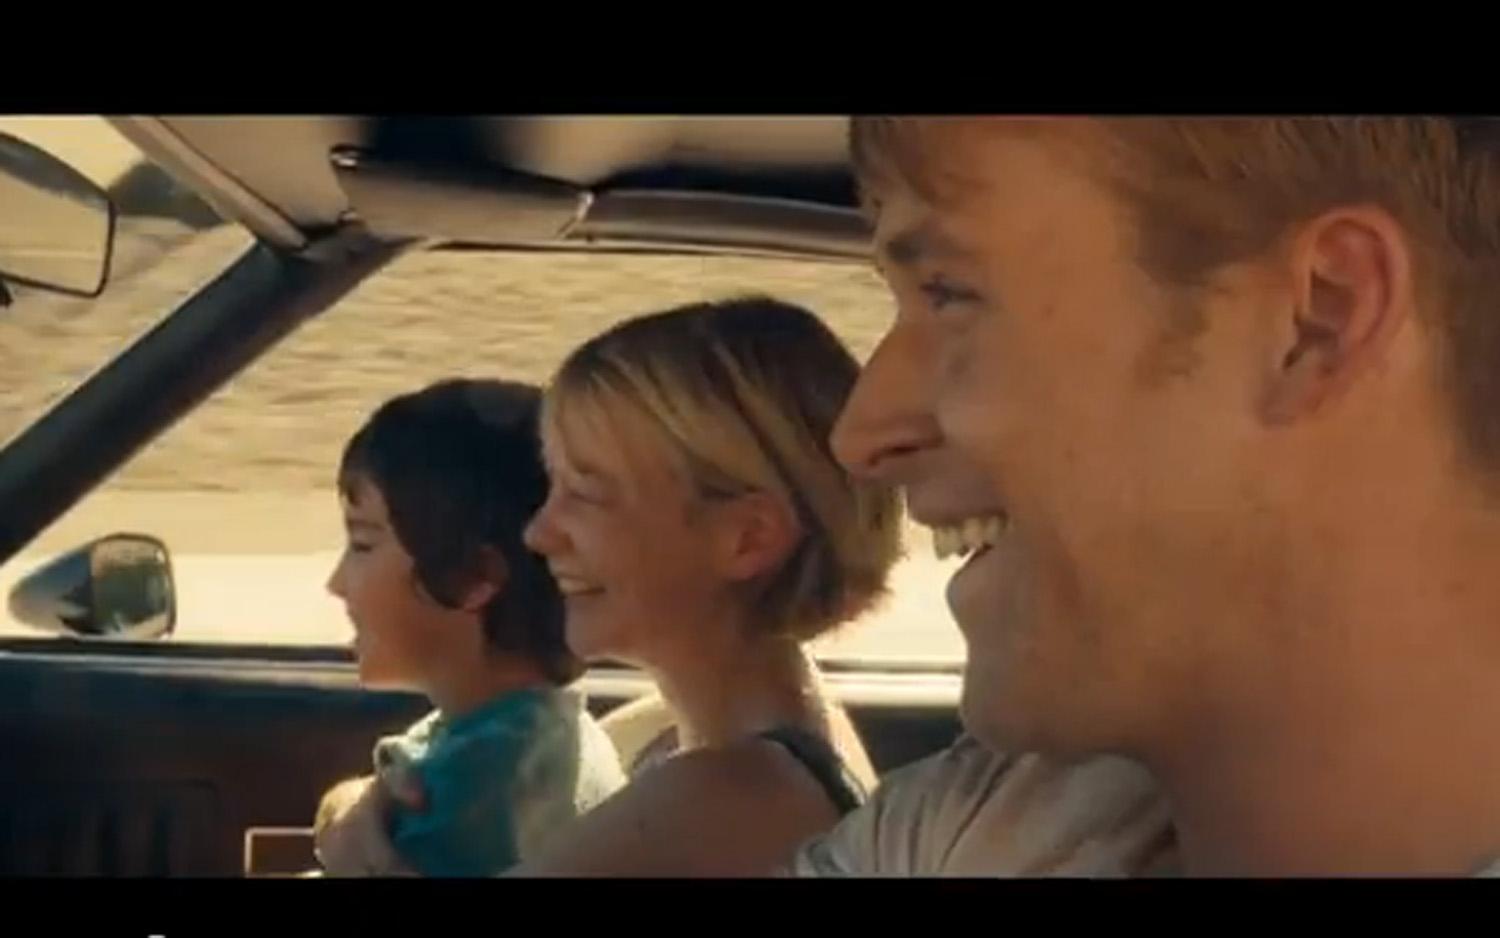 http://blogs.automotive.com/files/2011/07/Drive-the-Movie-Gosling-Mulligan-Child.jpg